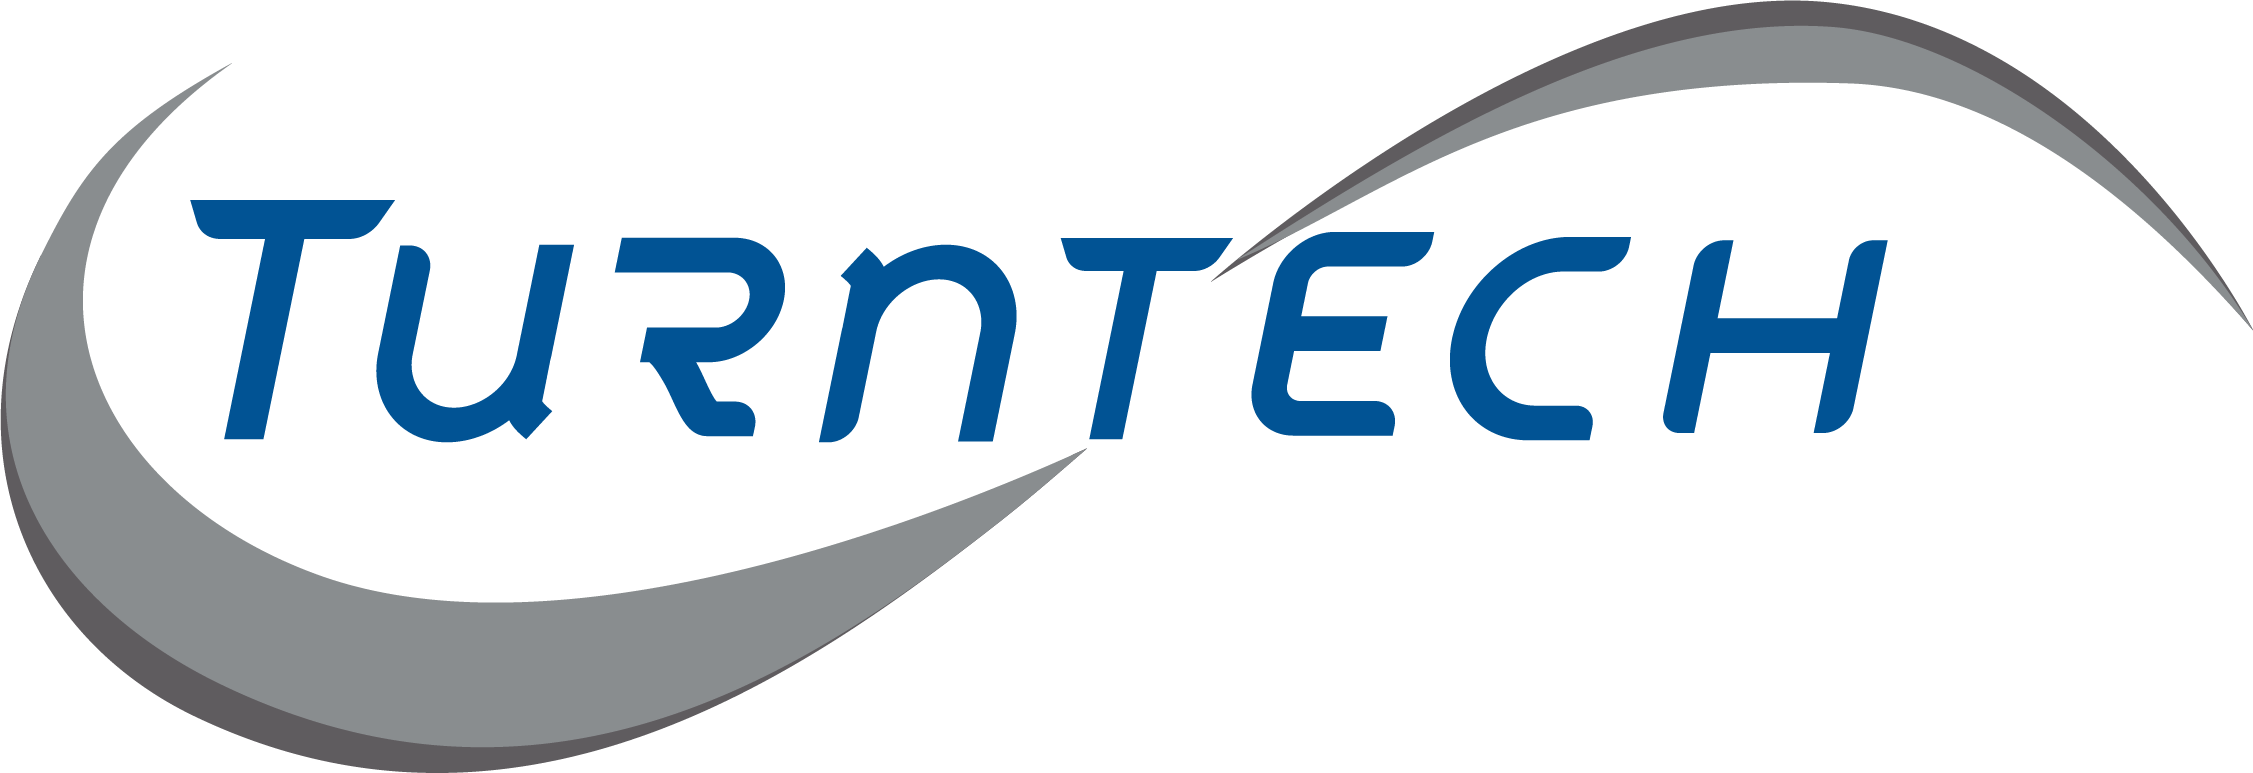 Turntech logo